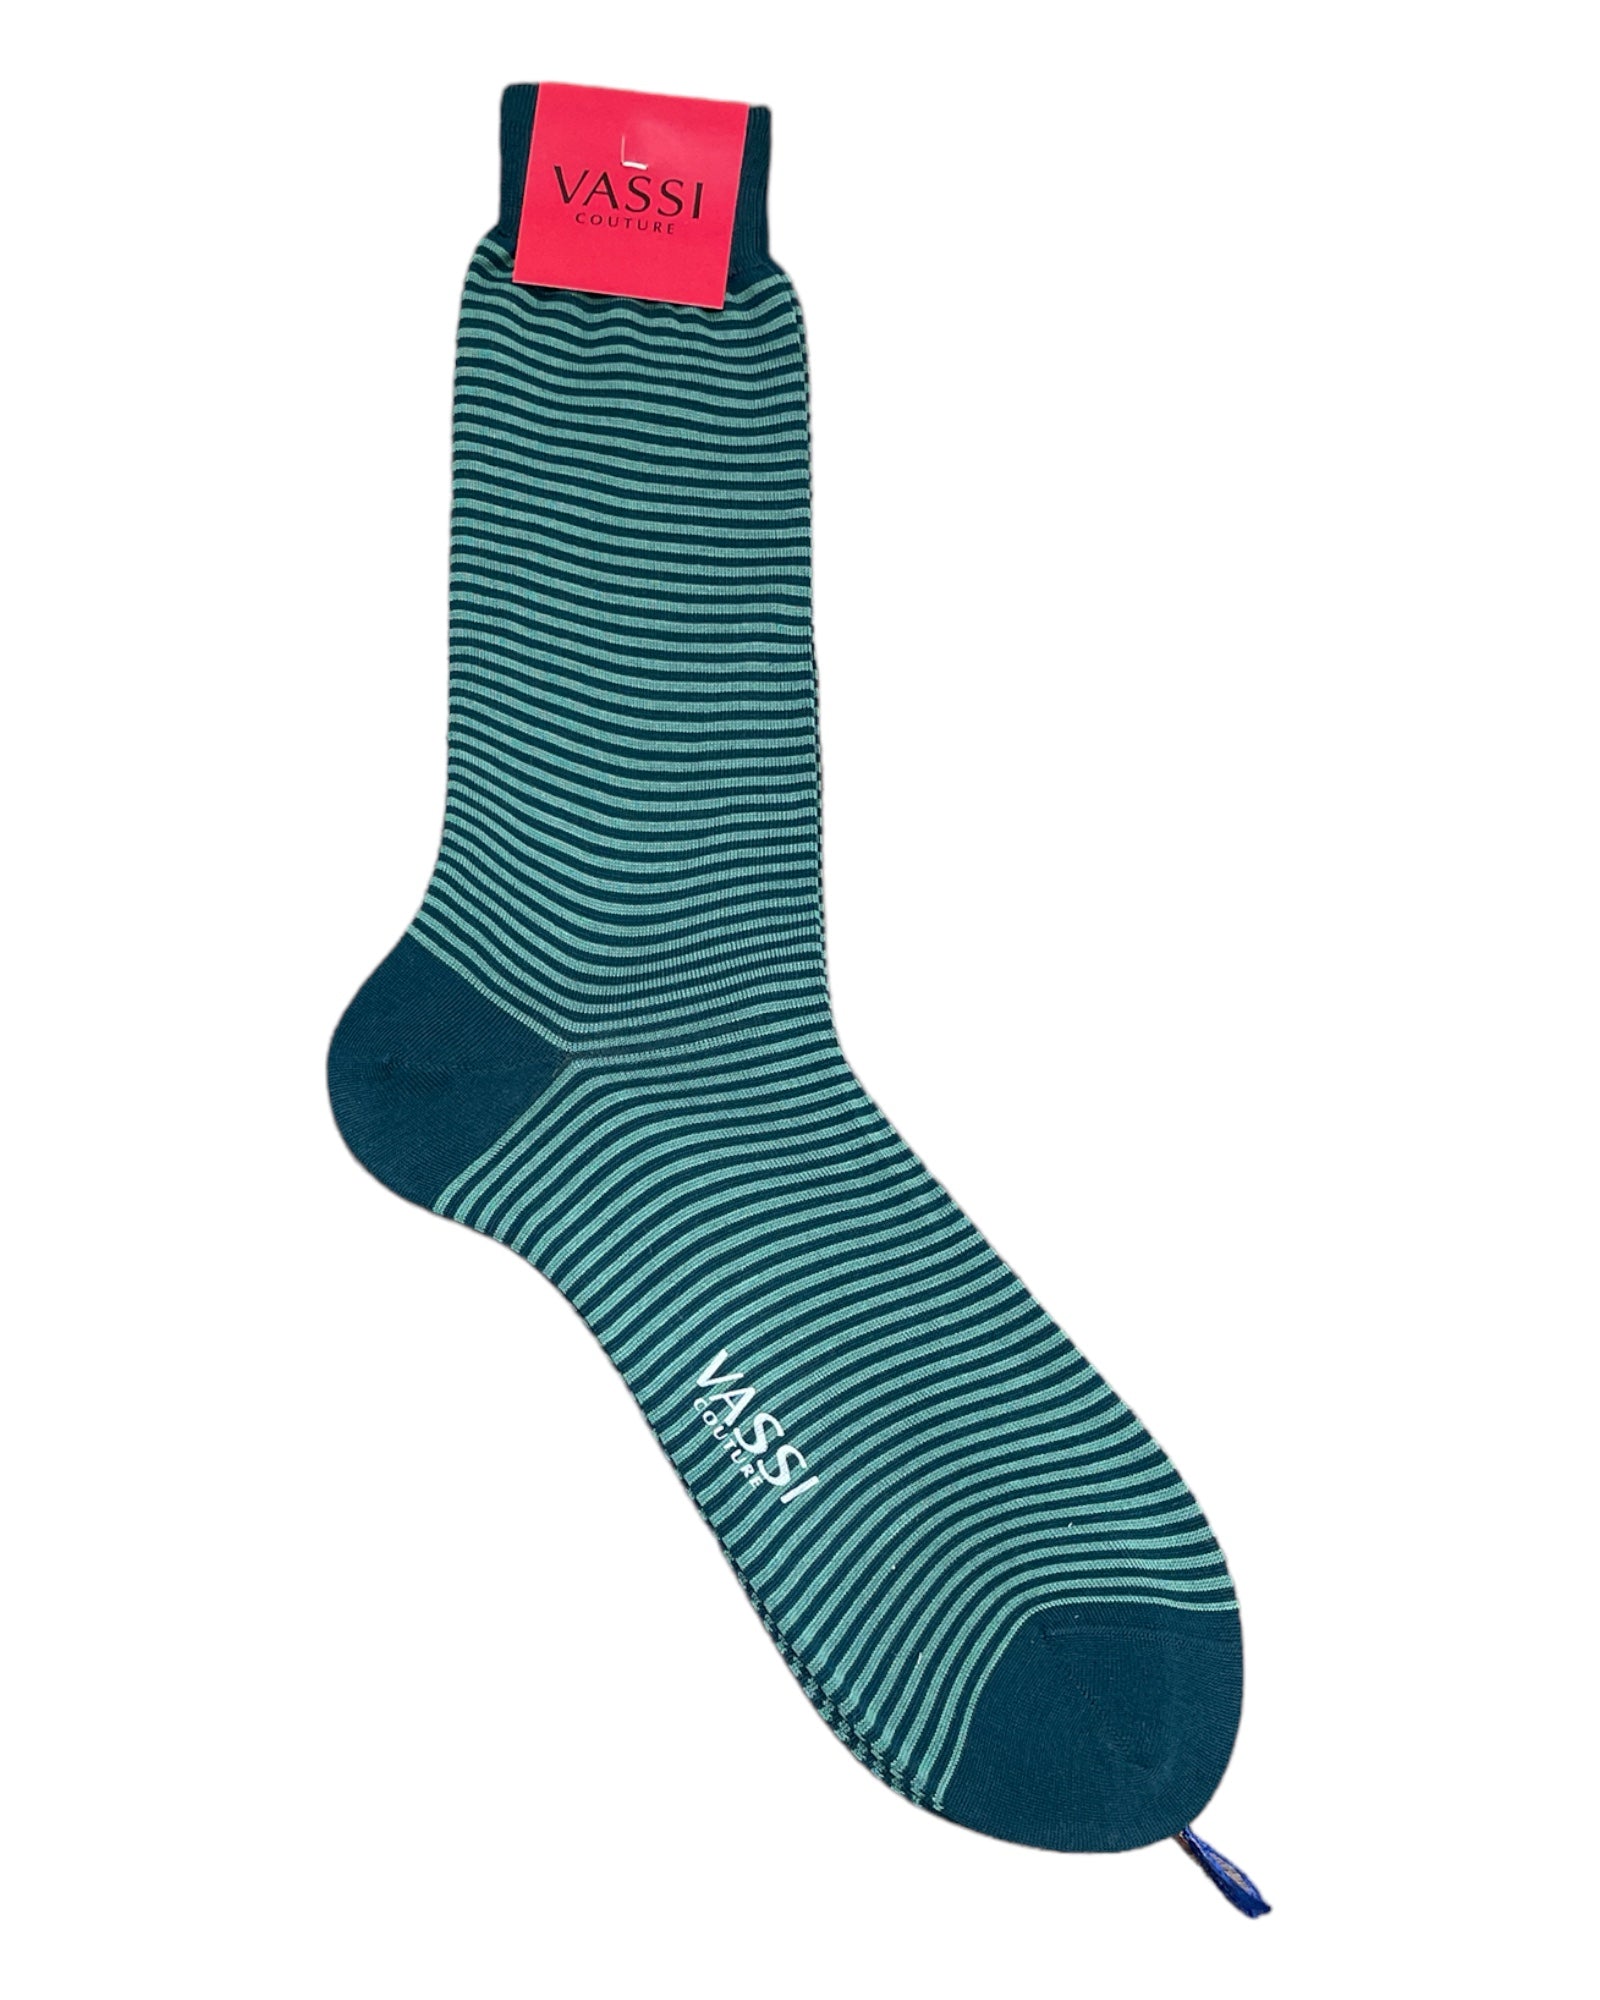 Extra-fine Horizontal Striped Cotton Socks - Emerald Green Socks